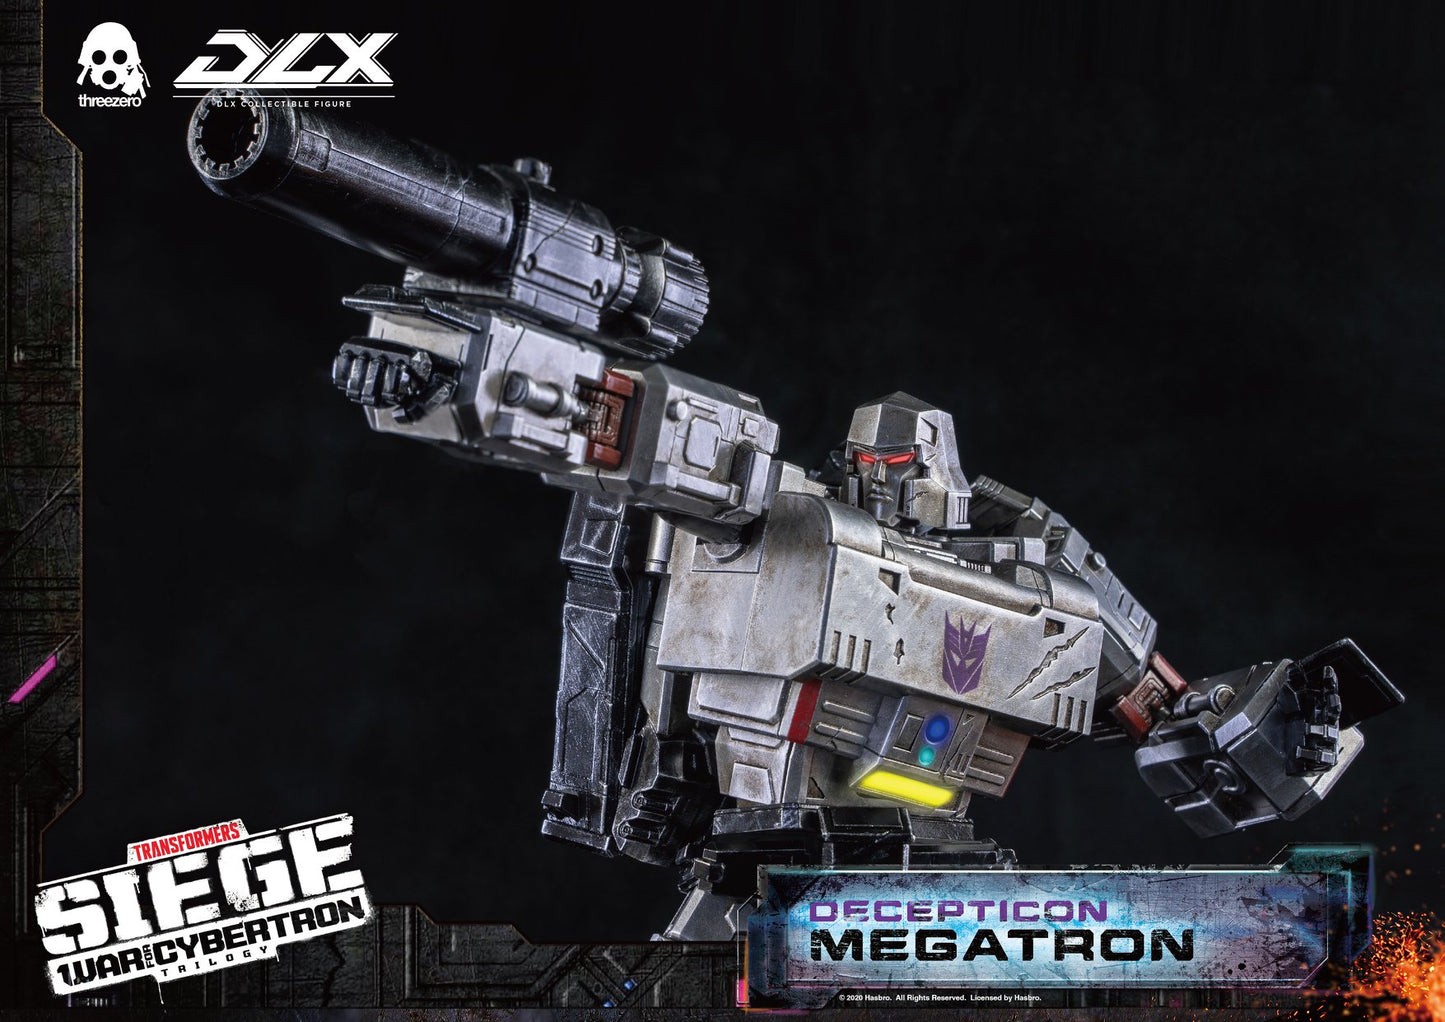 Pedido Figura DLX Megatron - Transformers Siege: War For Cybertron marca Threezero sin escala (25.4 cm)